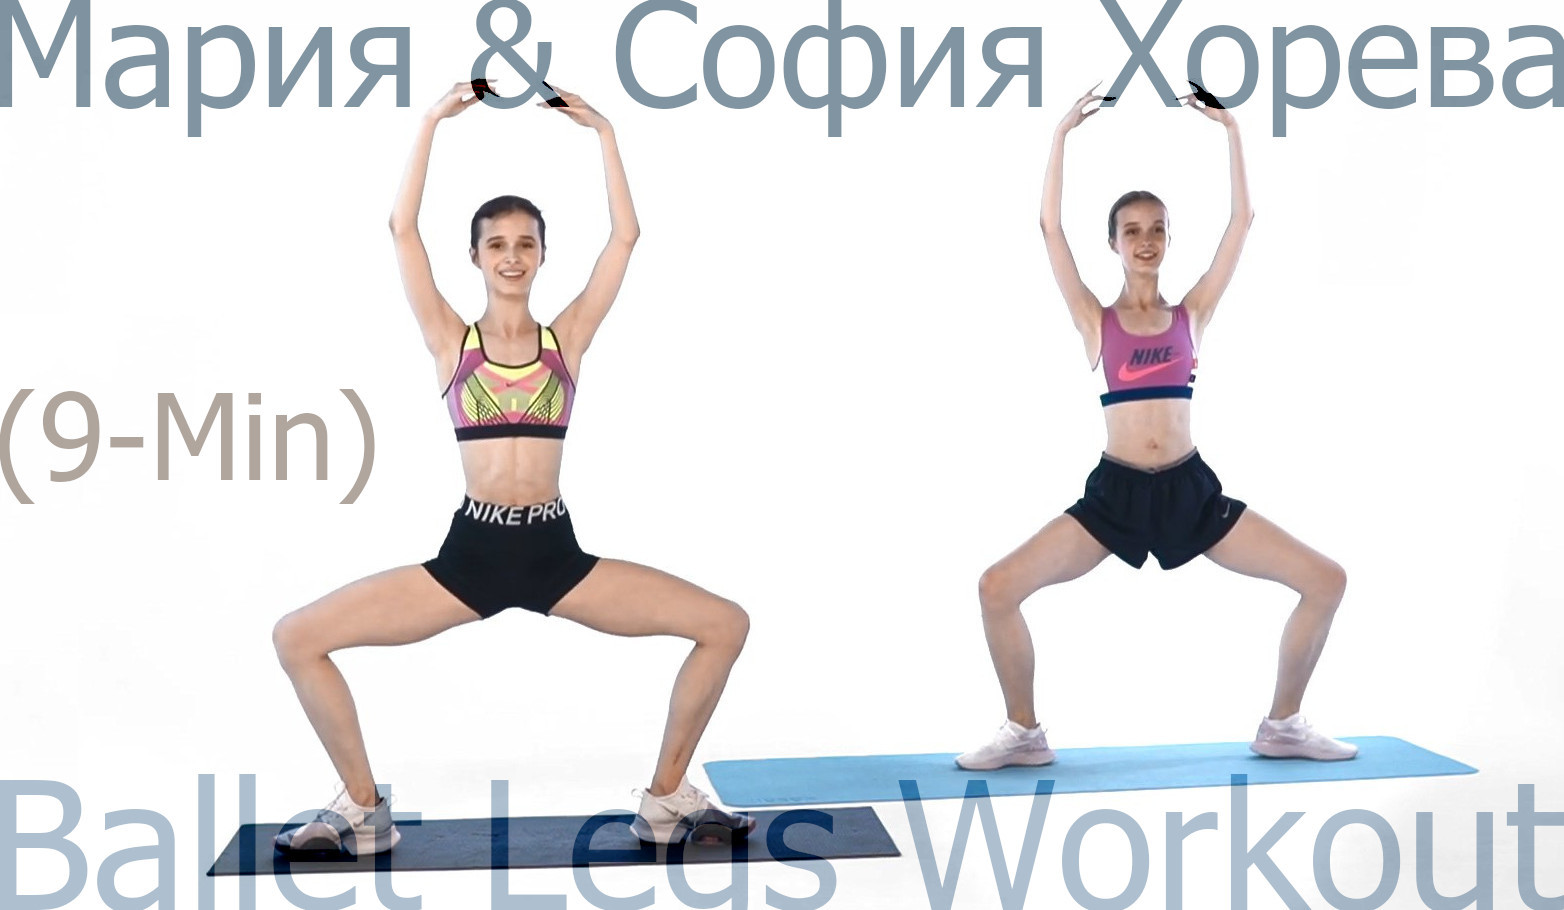 Maria Khoreva - Ballet Legs Workout